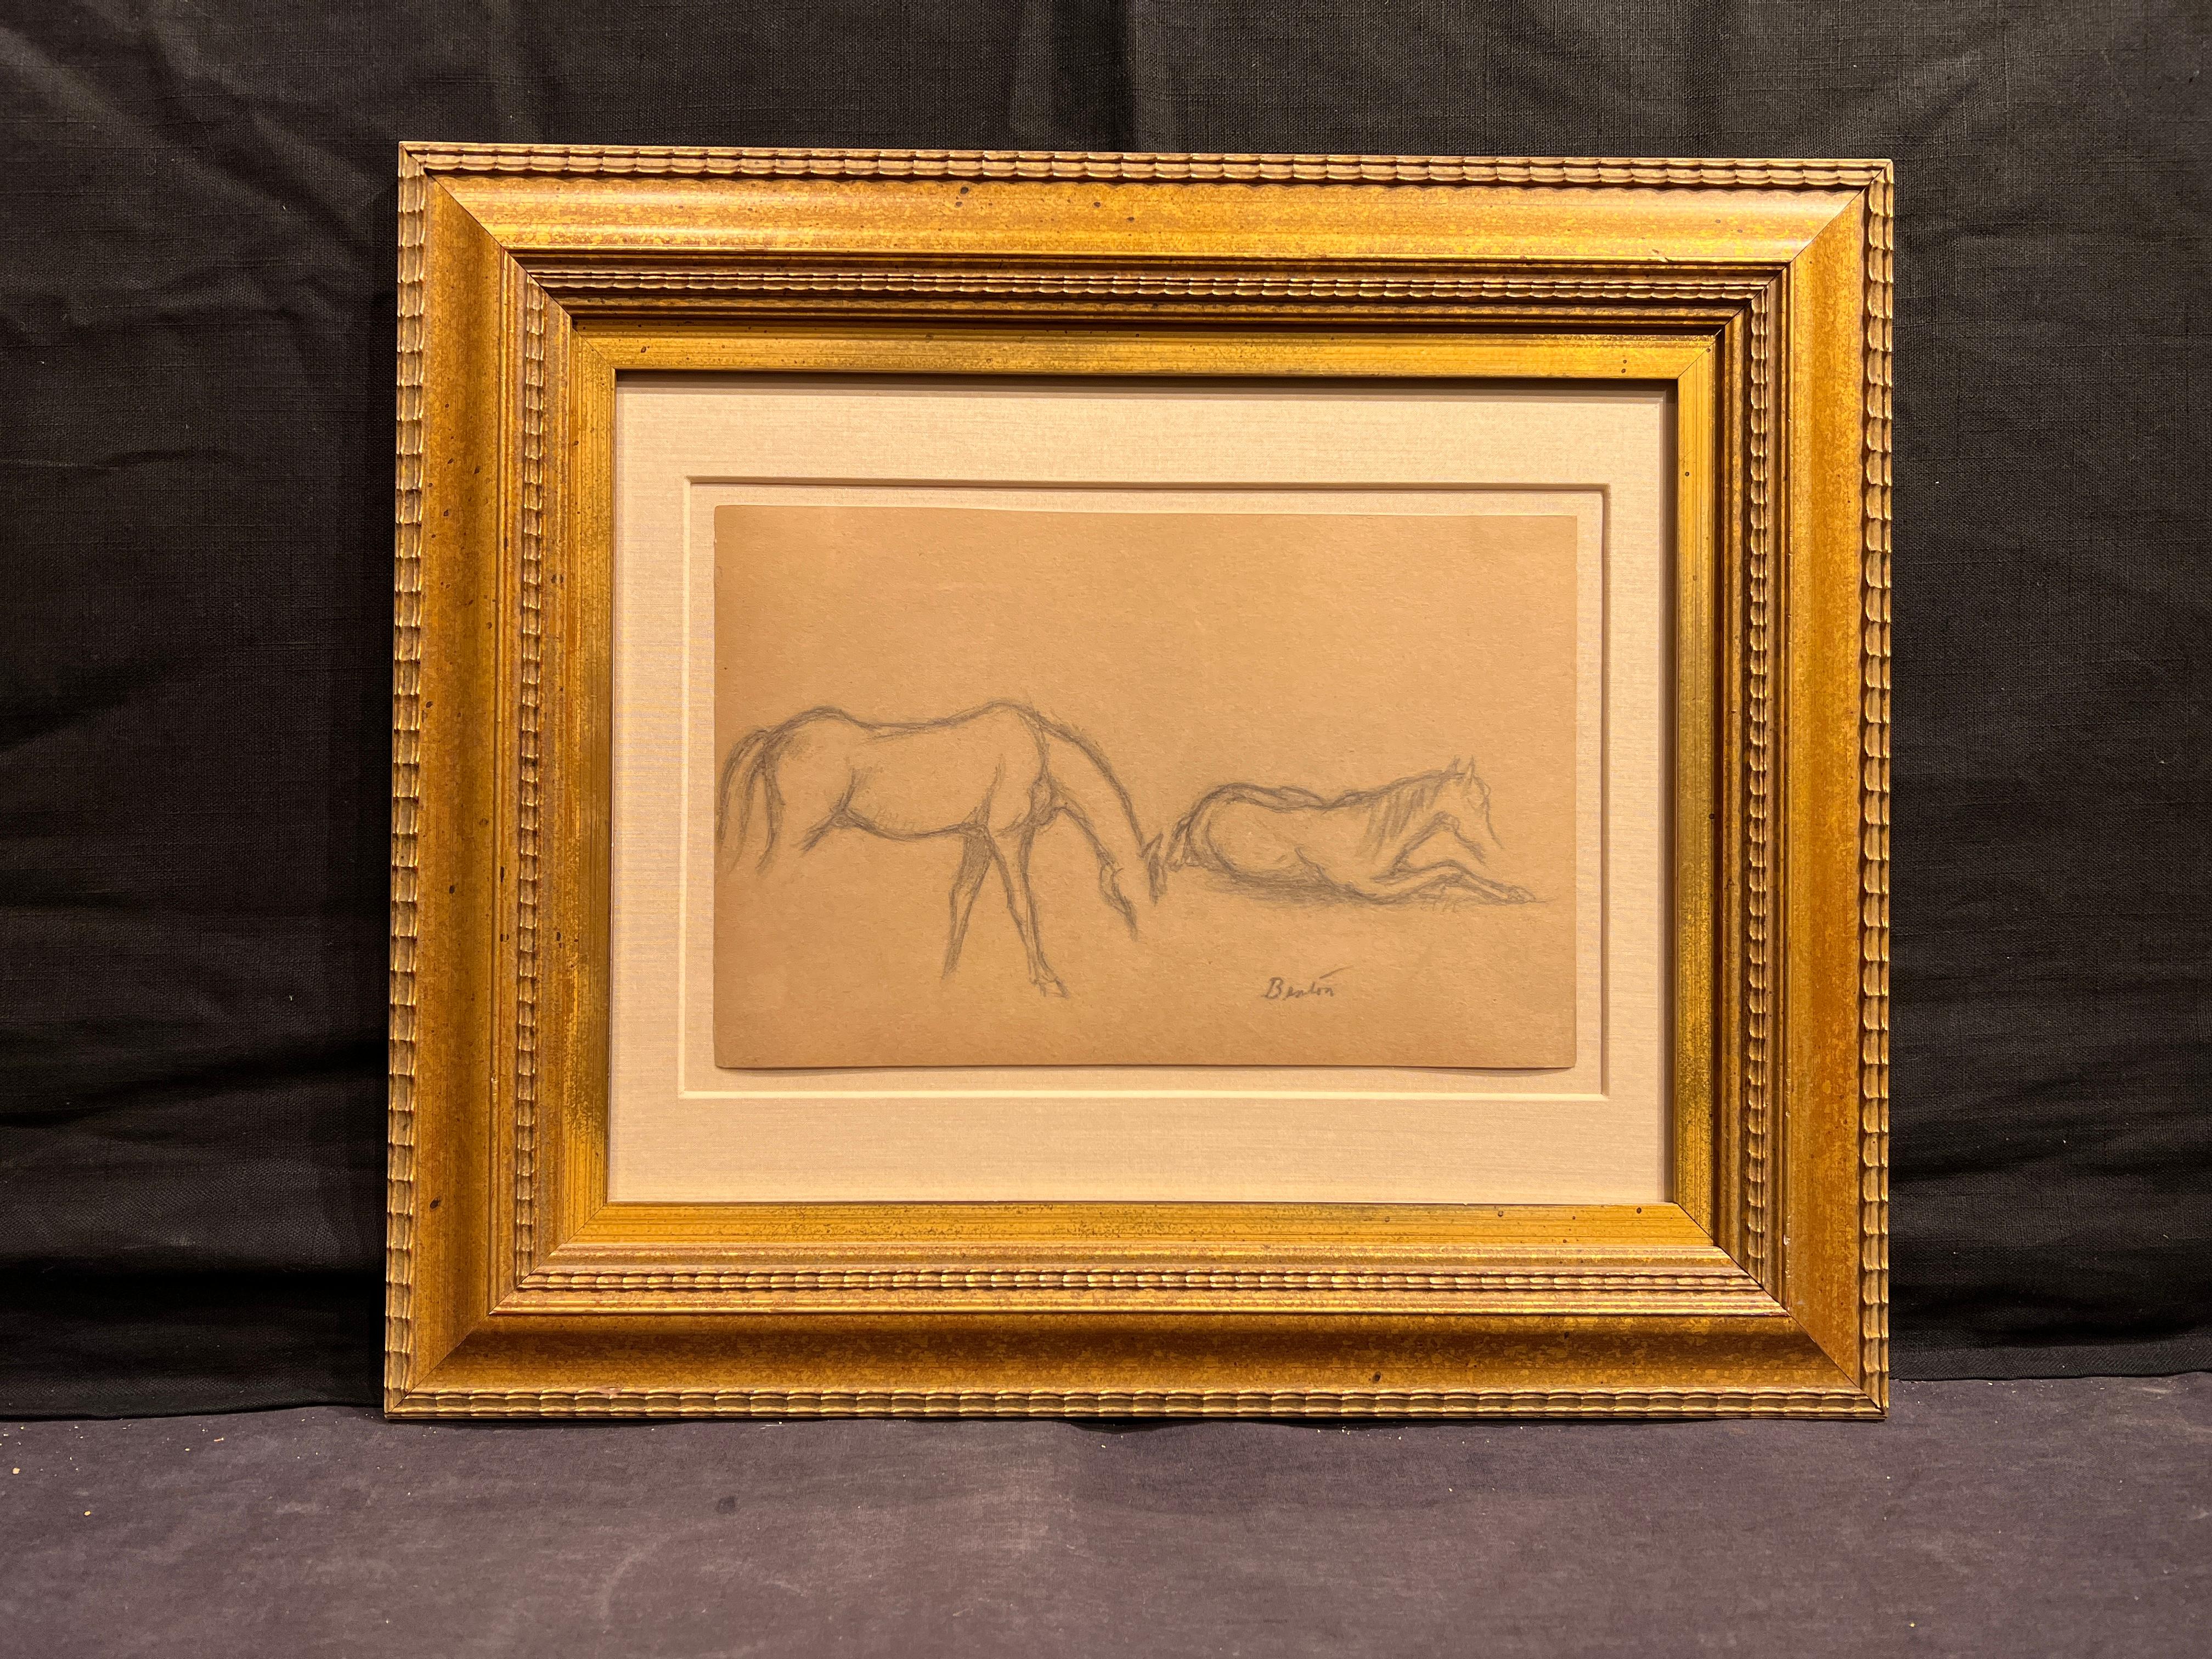 Two Horses - Modern Art by Thomas Hart Benton